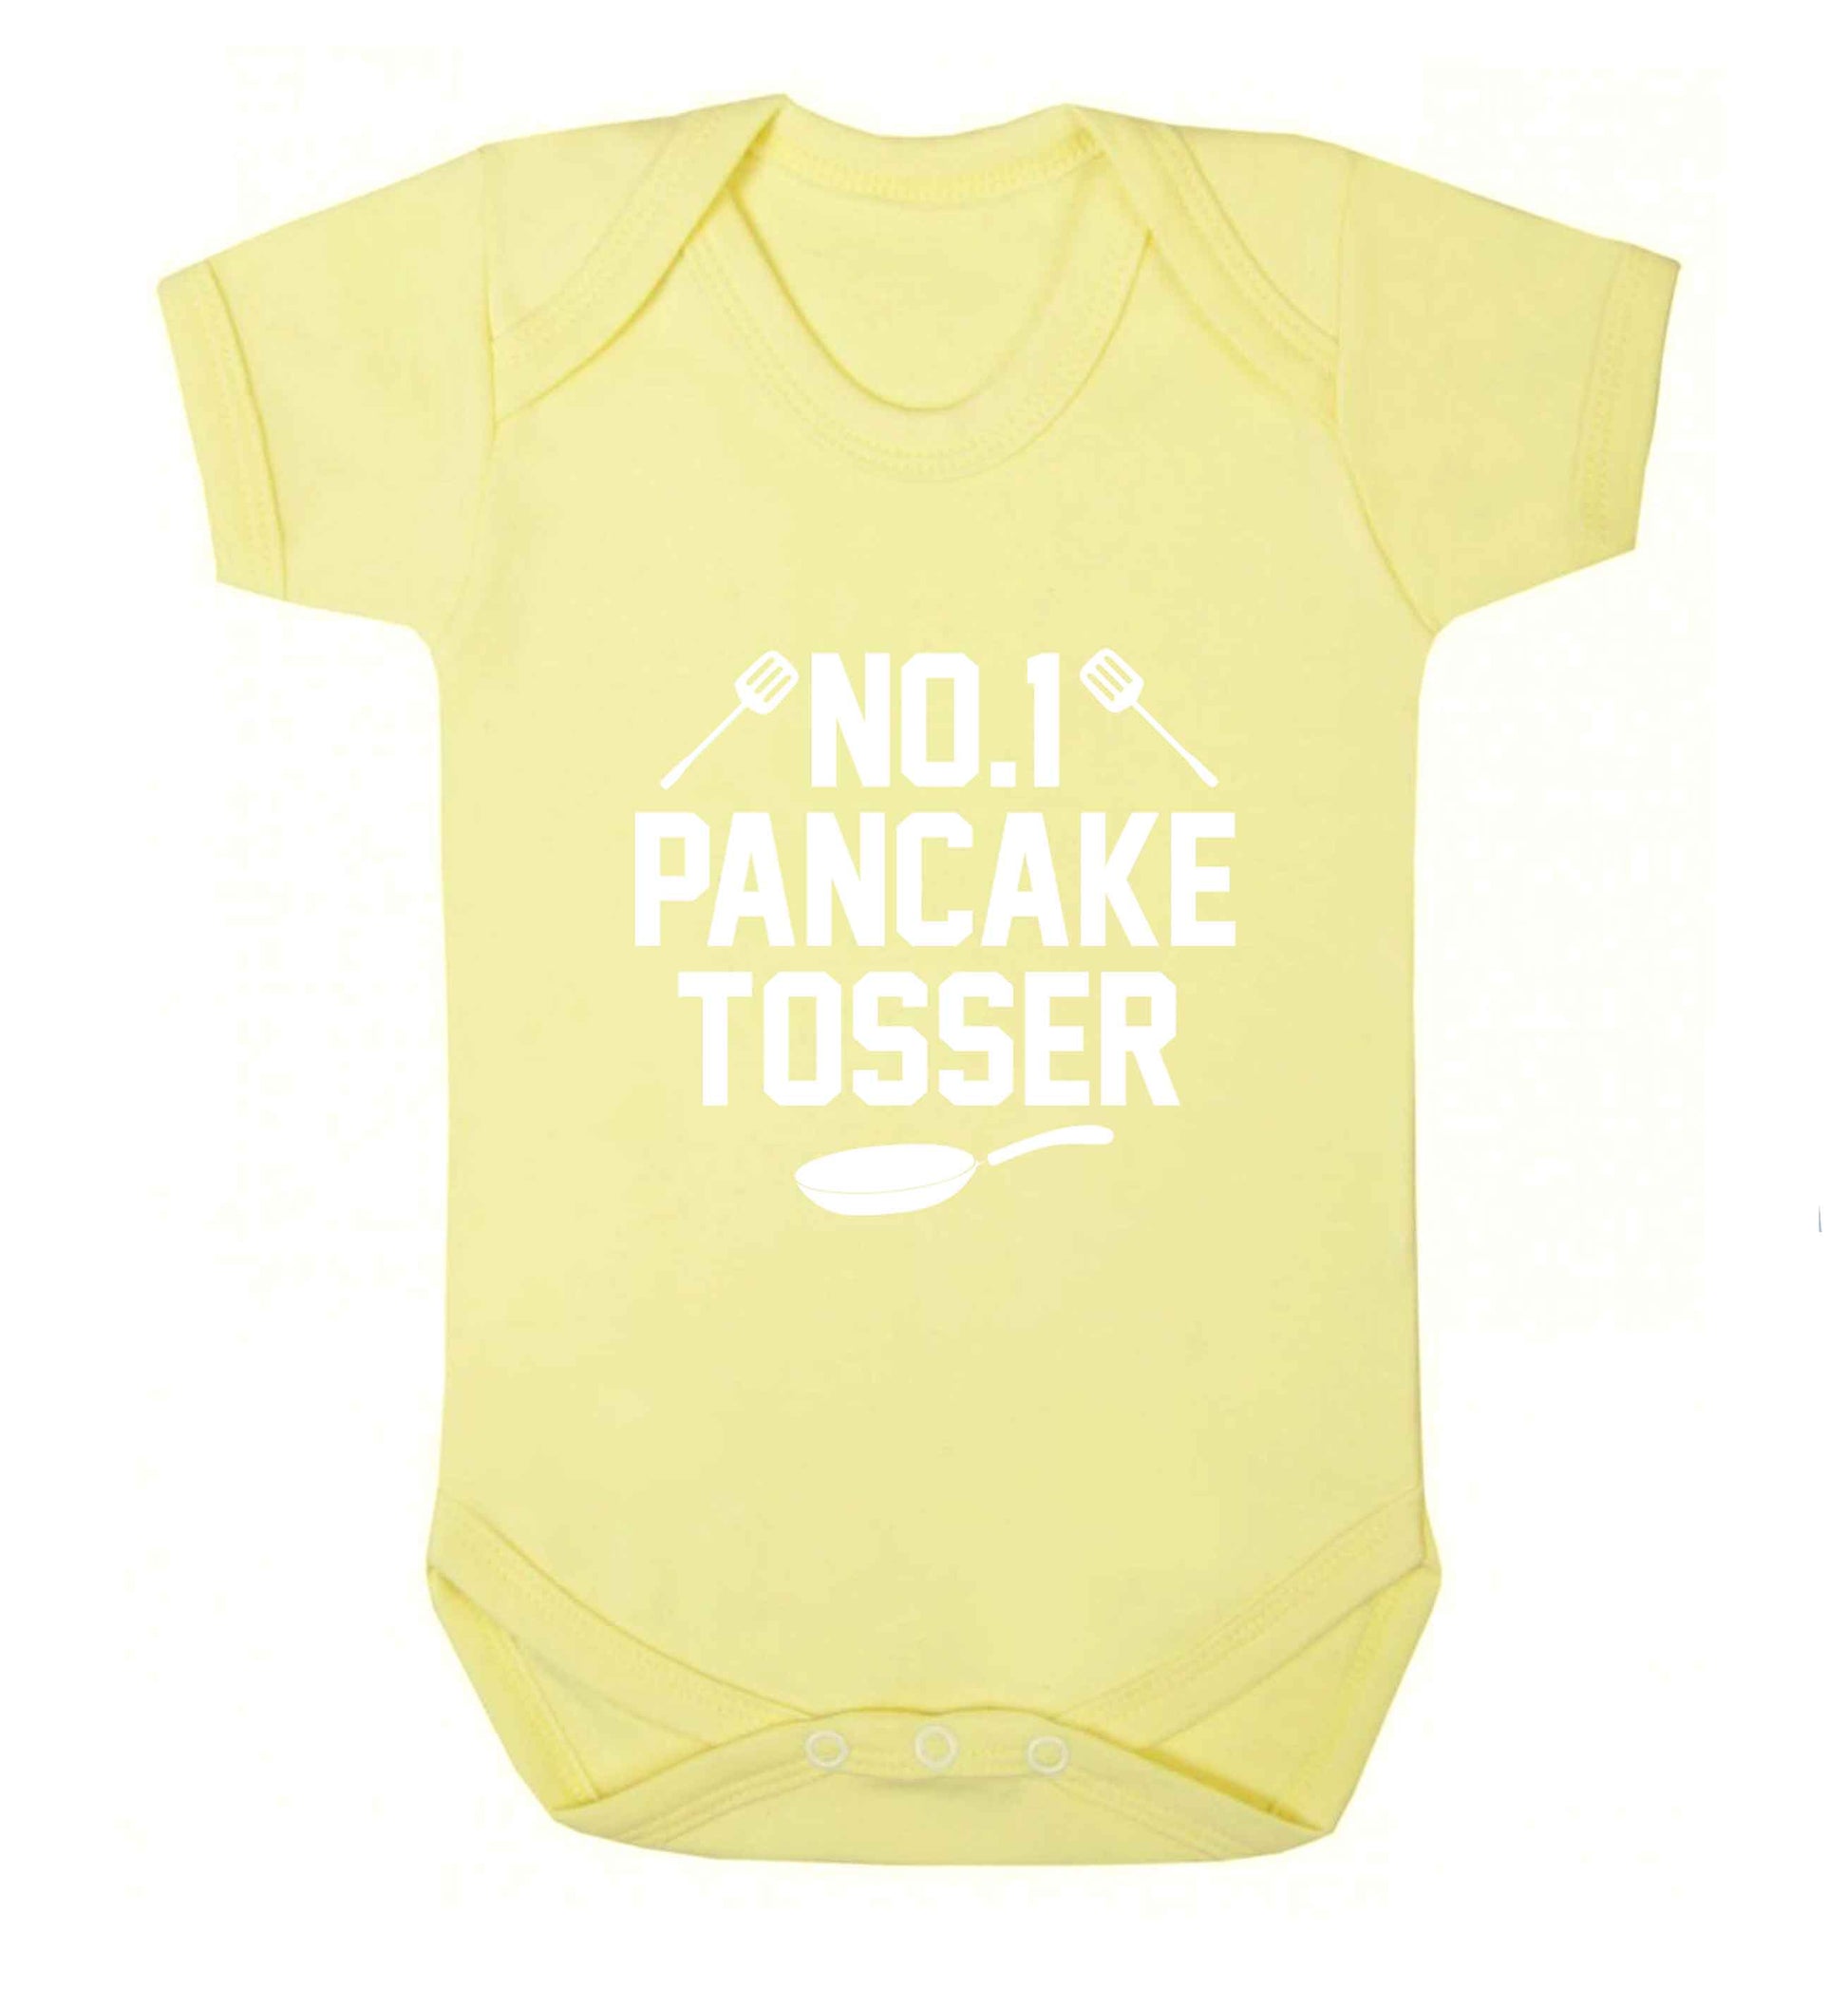 No.1 Pancake tosser baby vest pale yellow 18-24 months